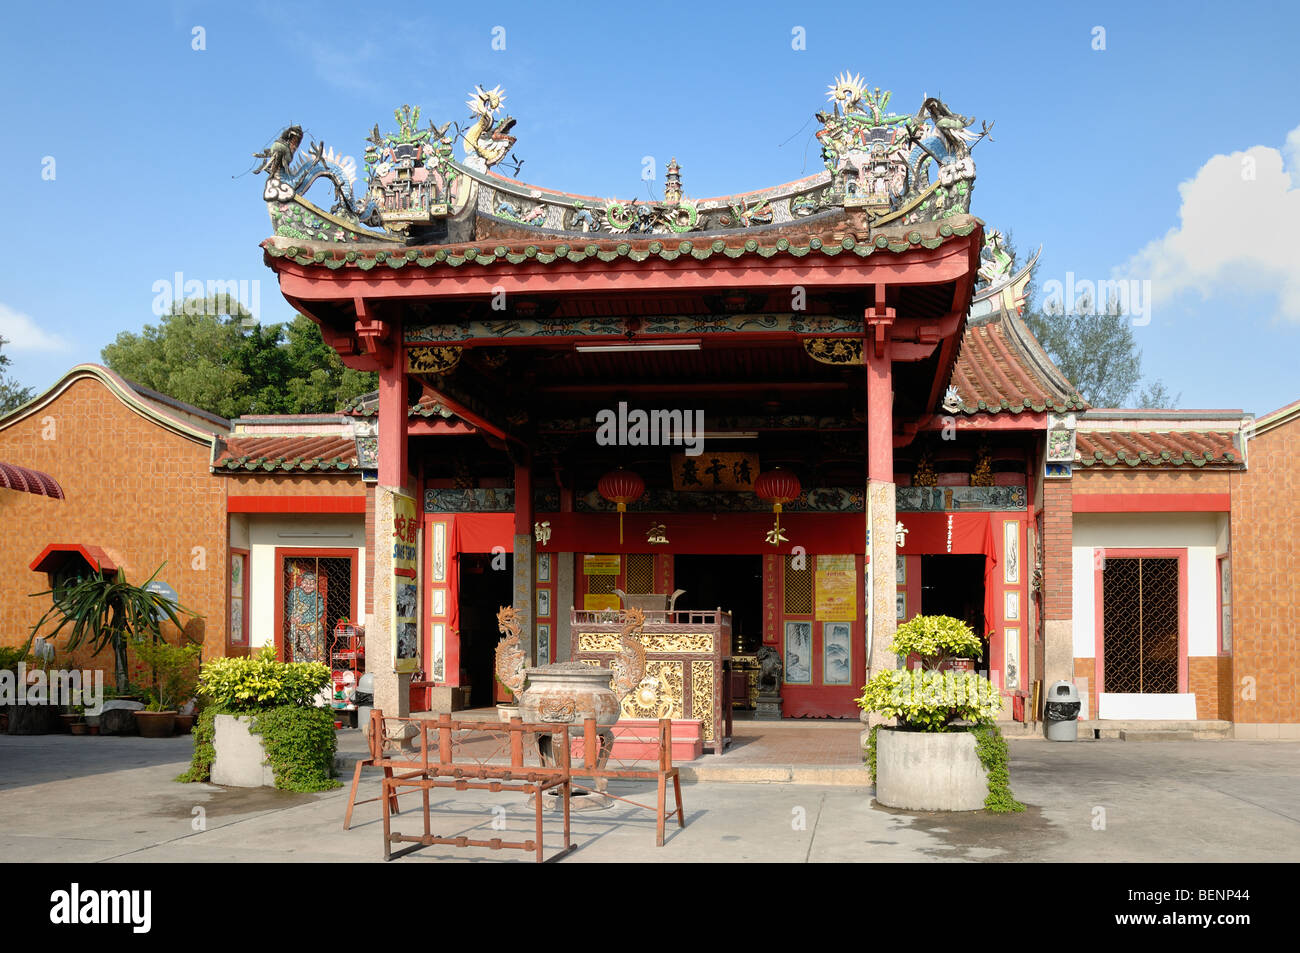 Entrance & Exterior Facade of the Chinese Snake Temple Penang Malaysia Stock Photo